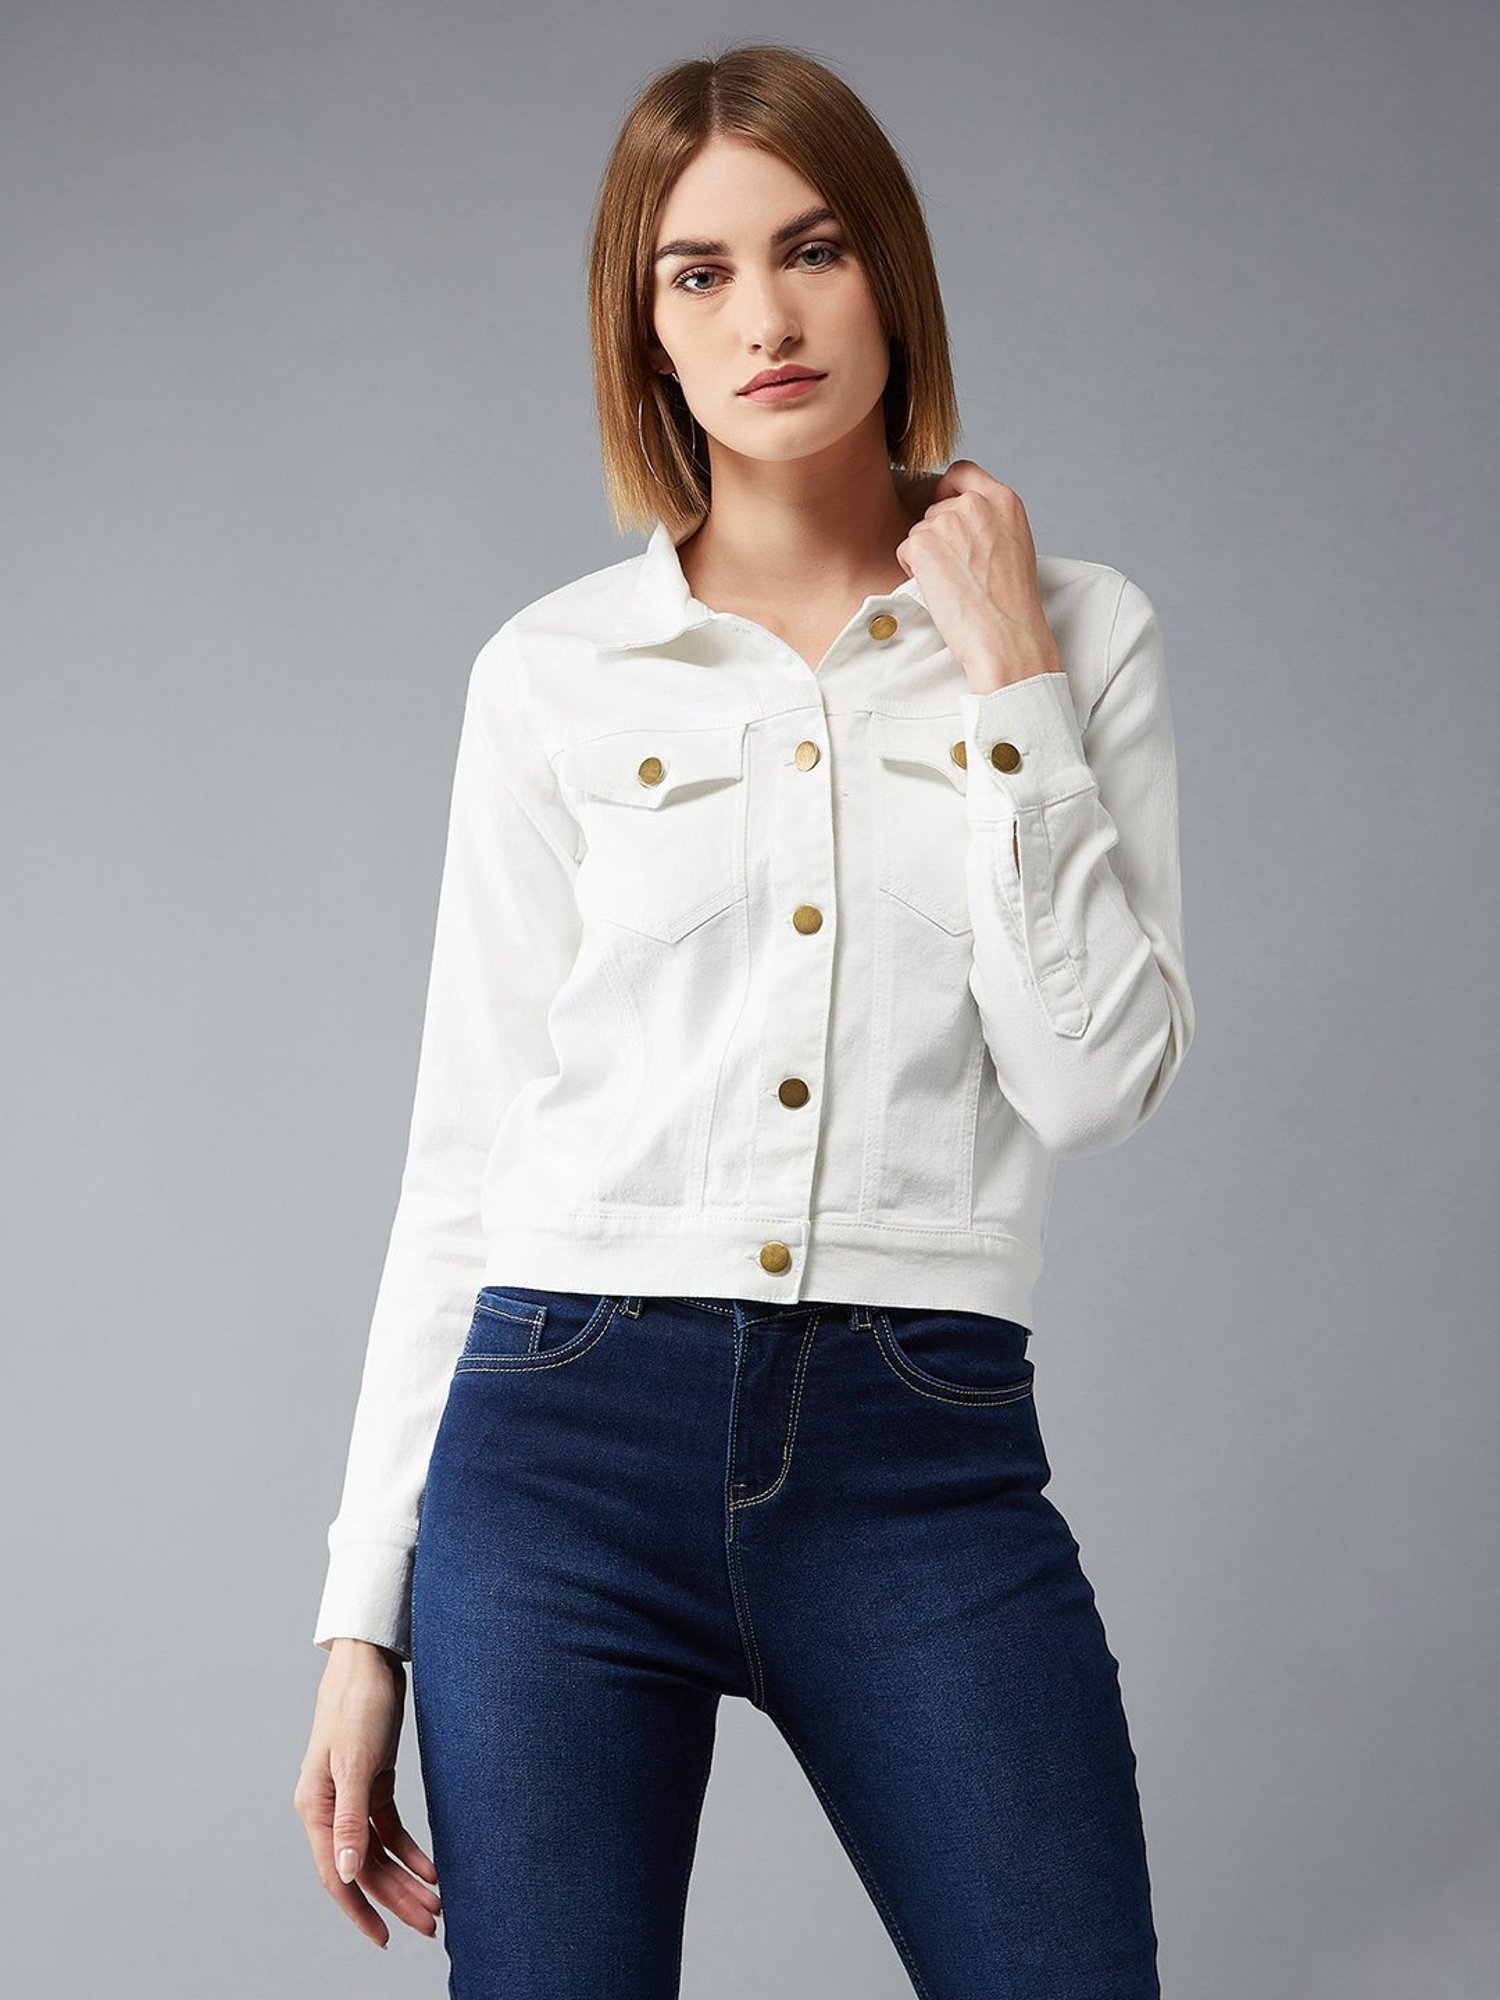 White Denim Jacket - Buy White Denim Jacket online in India